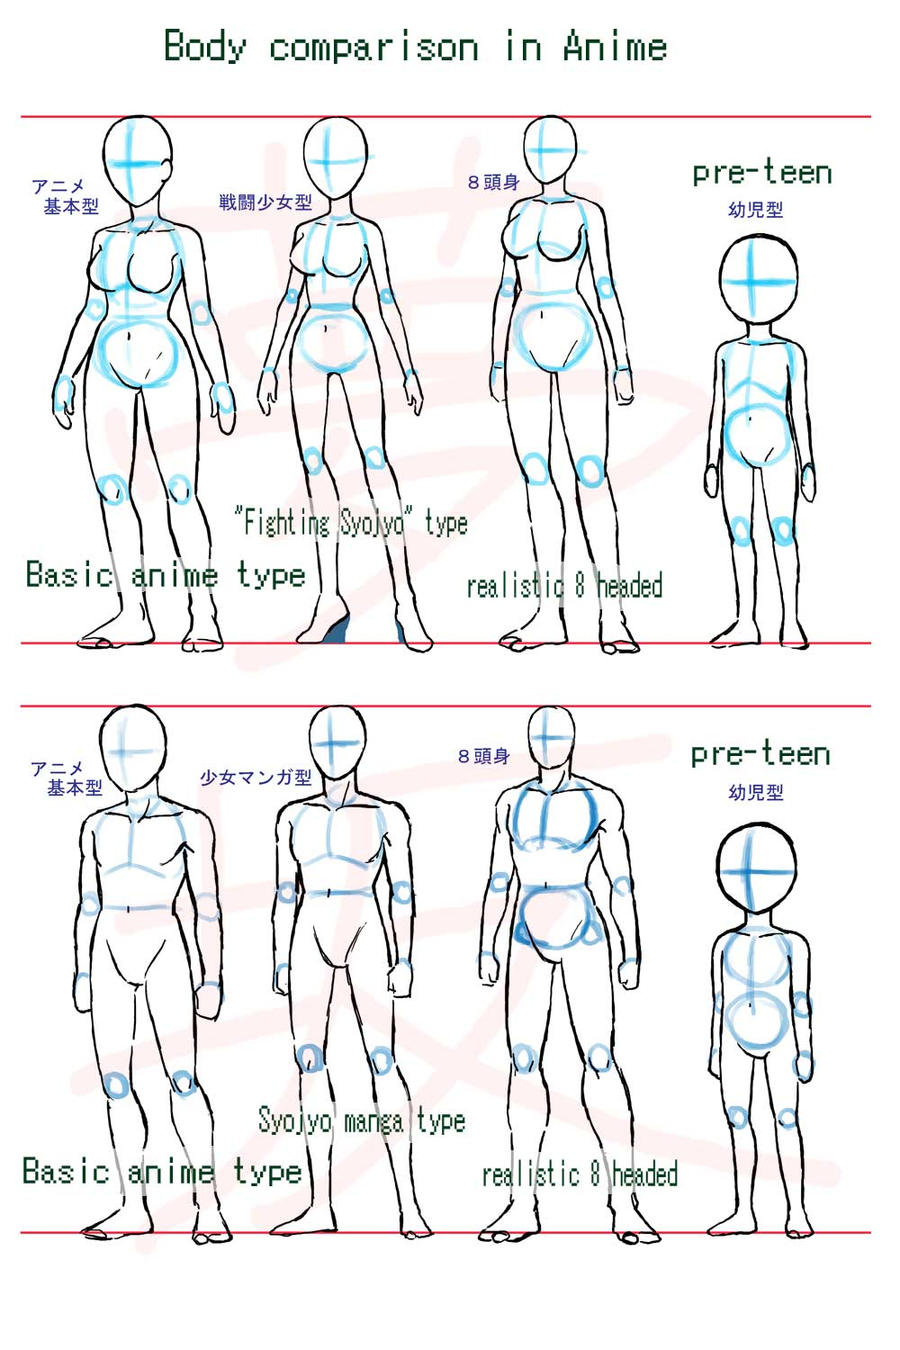 Anime body style comparison by Yumezaka on DeviantArt